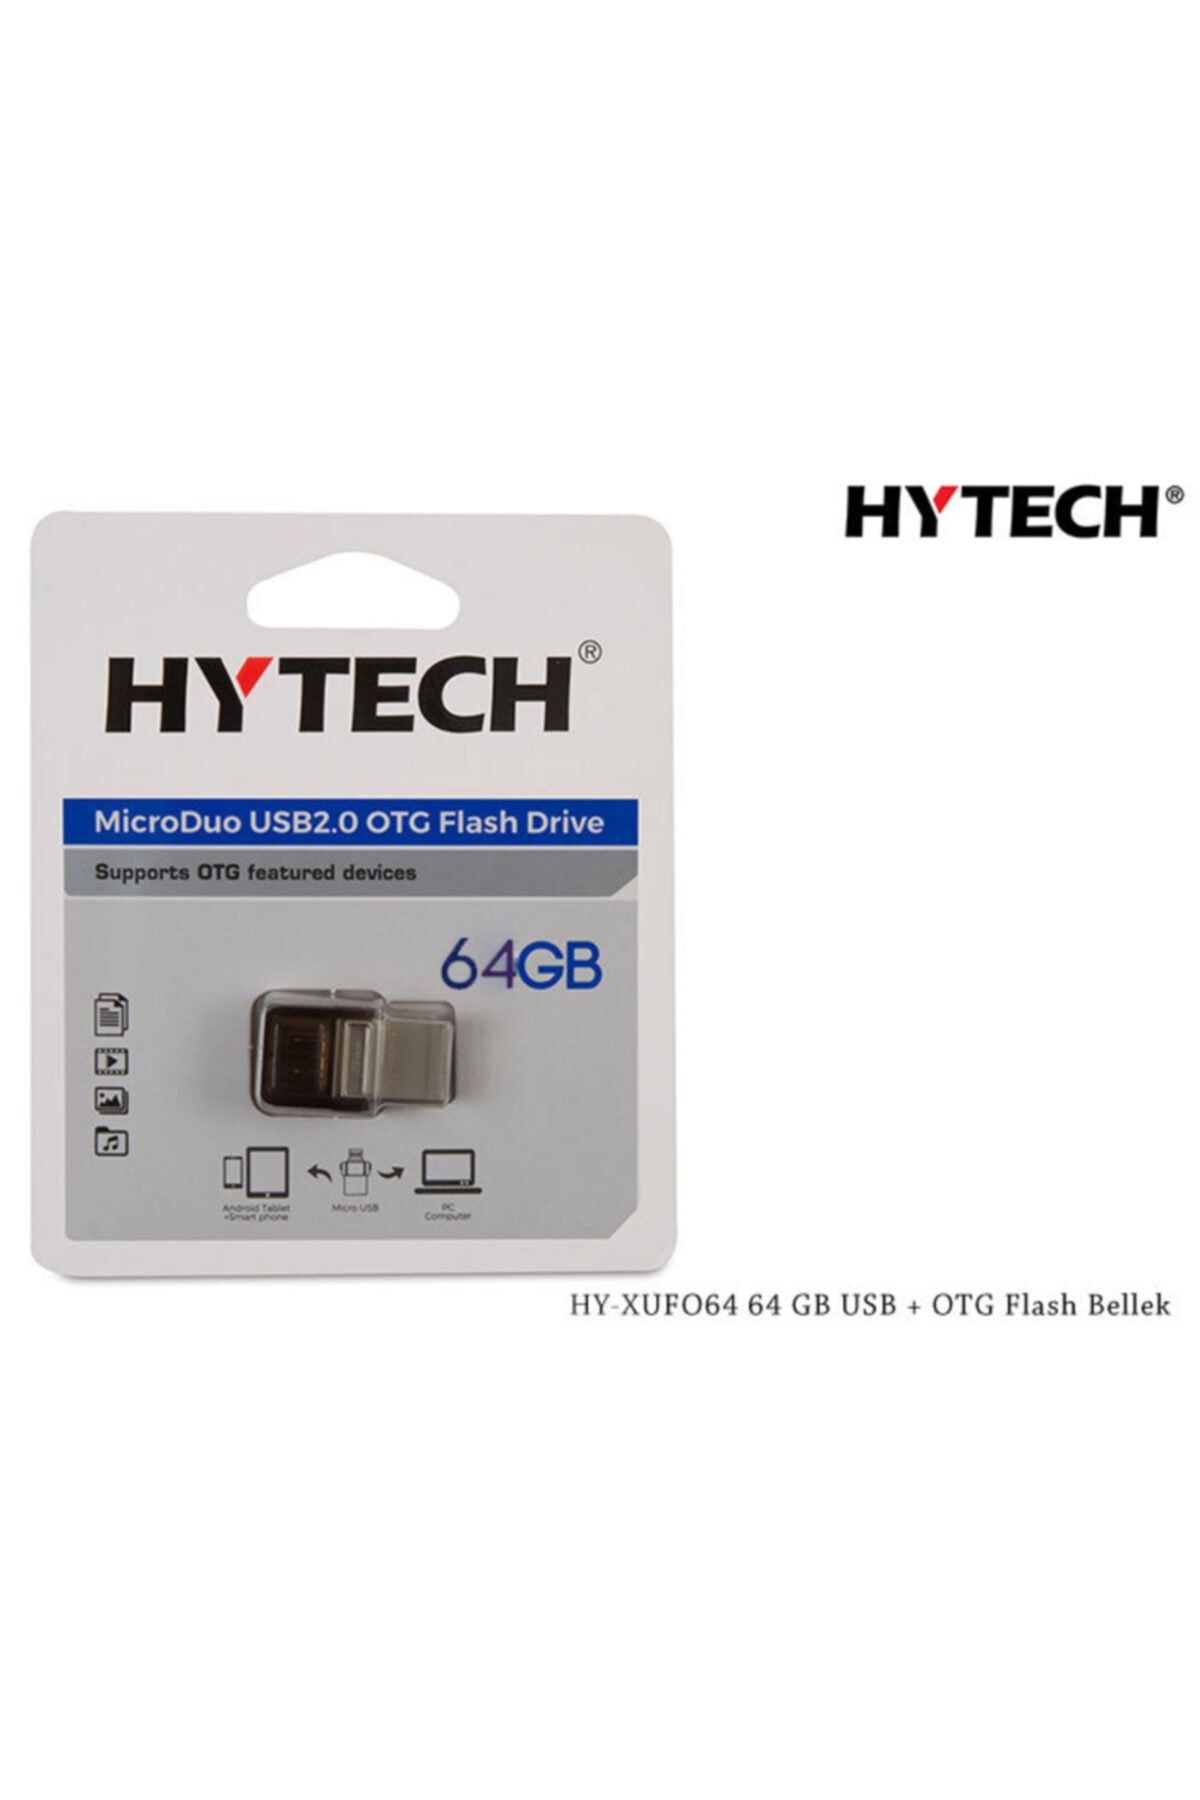 Hytech Hy-xufo64 64 Gb Usb + Otg Flash Bellek